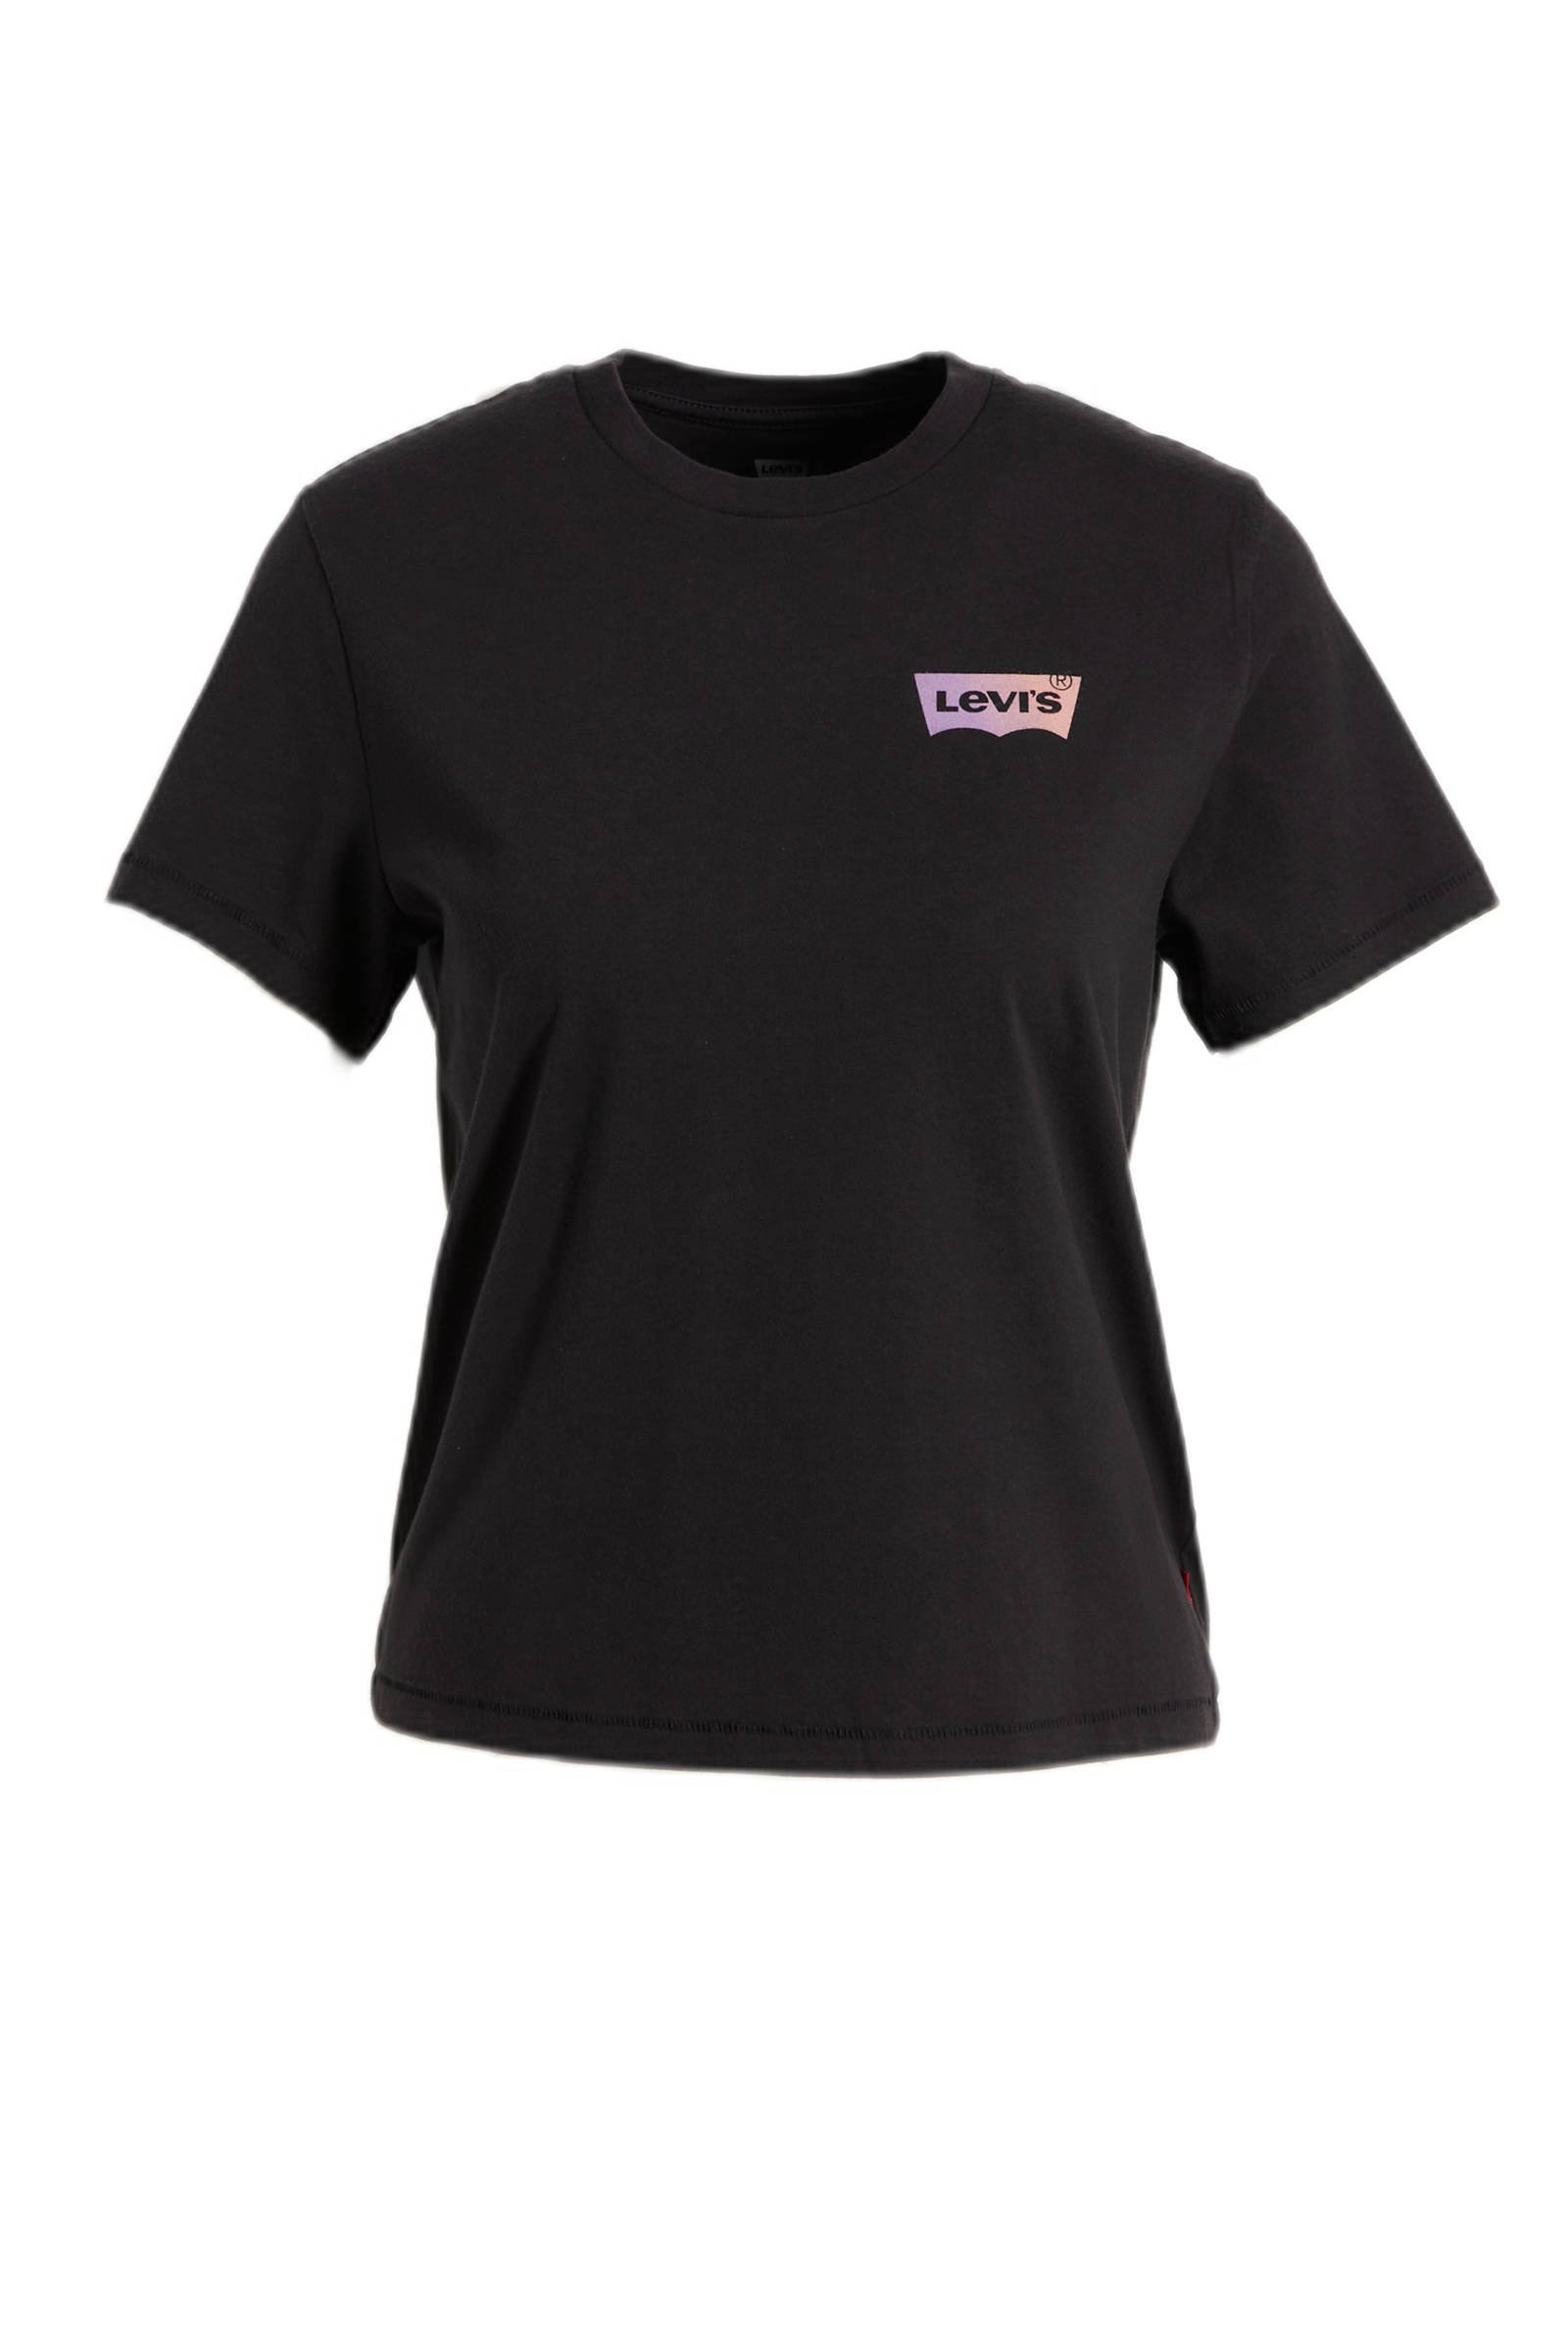 Levi\u2019s T-shirt roze-zwart gestreept patroon casual uitstraling Mode Shirts T-shirts Levi’s 